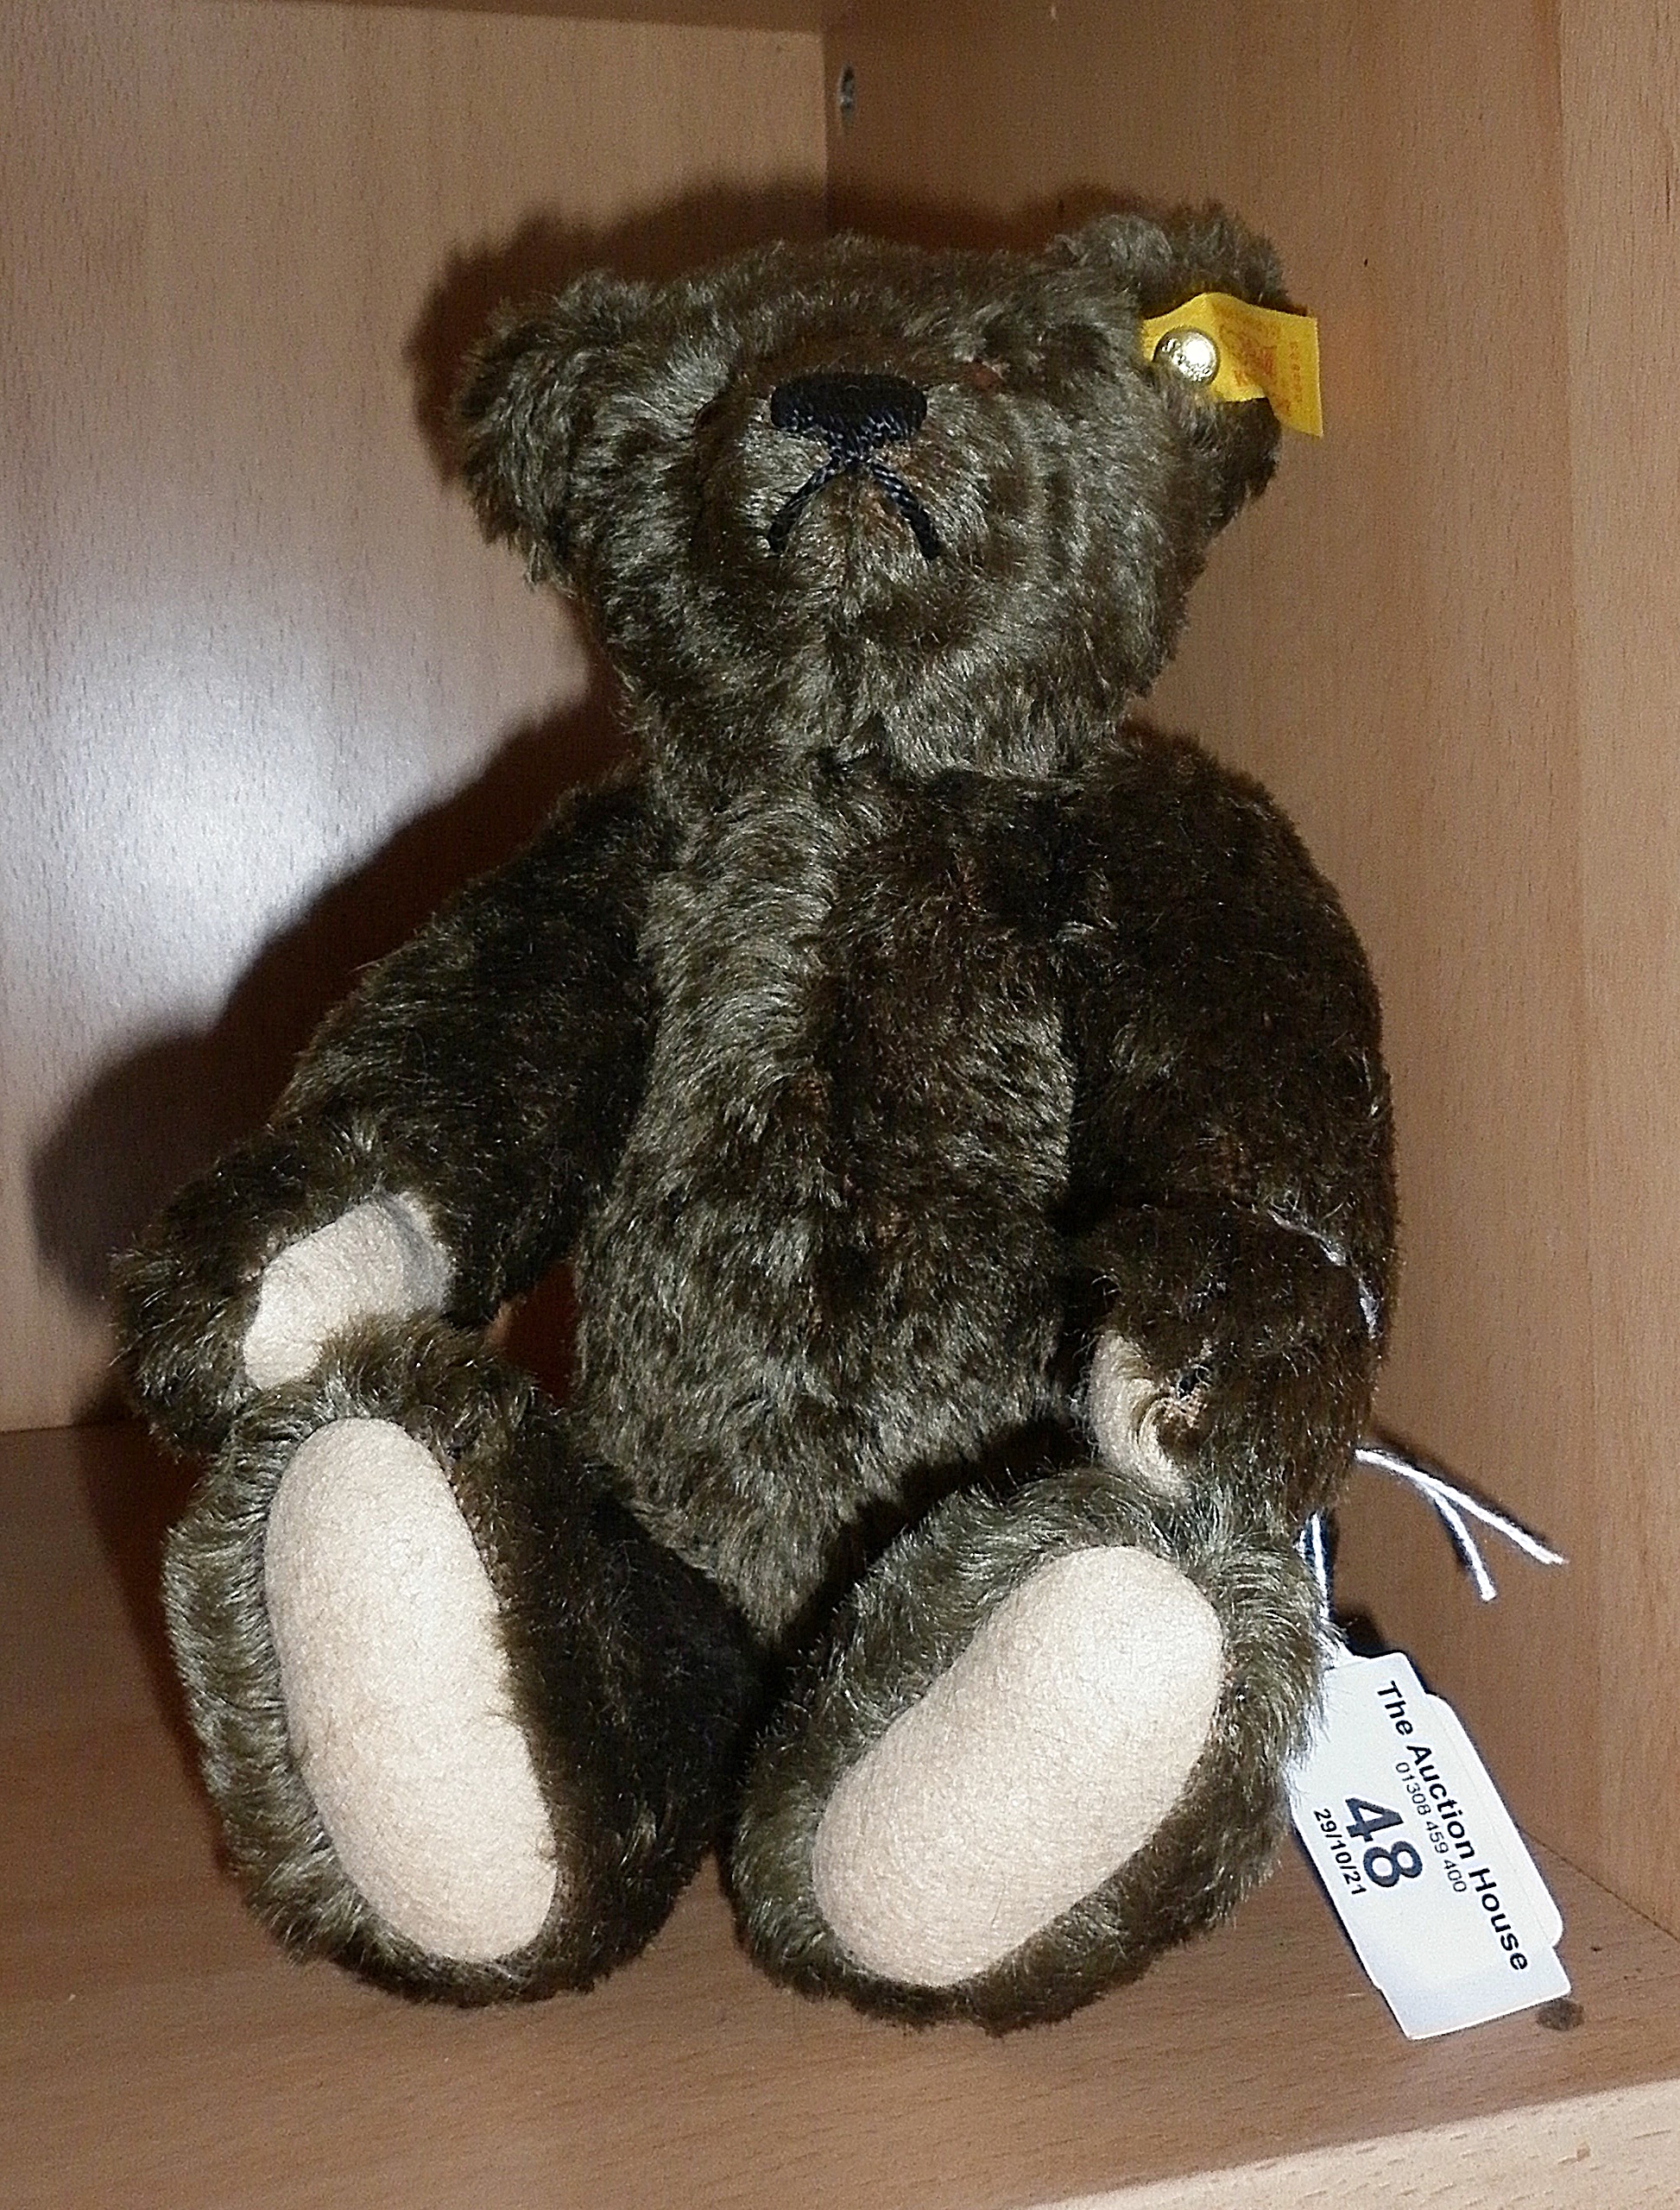 Steiff Classic 1920 teddy bear, No 000829